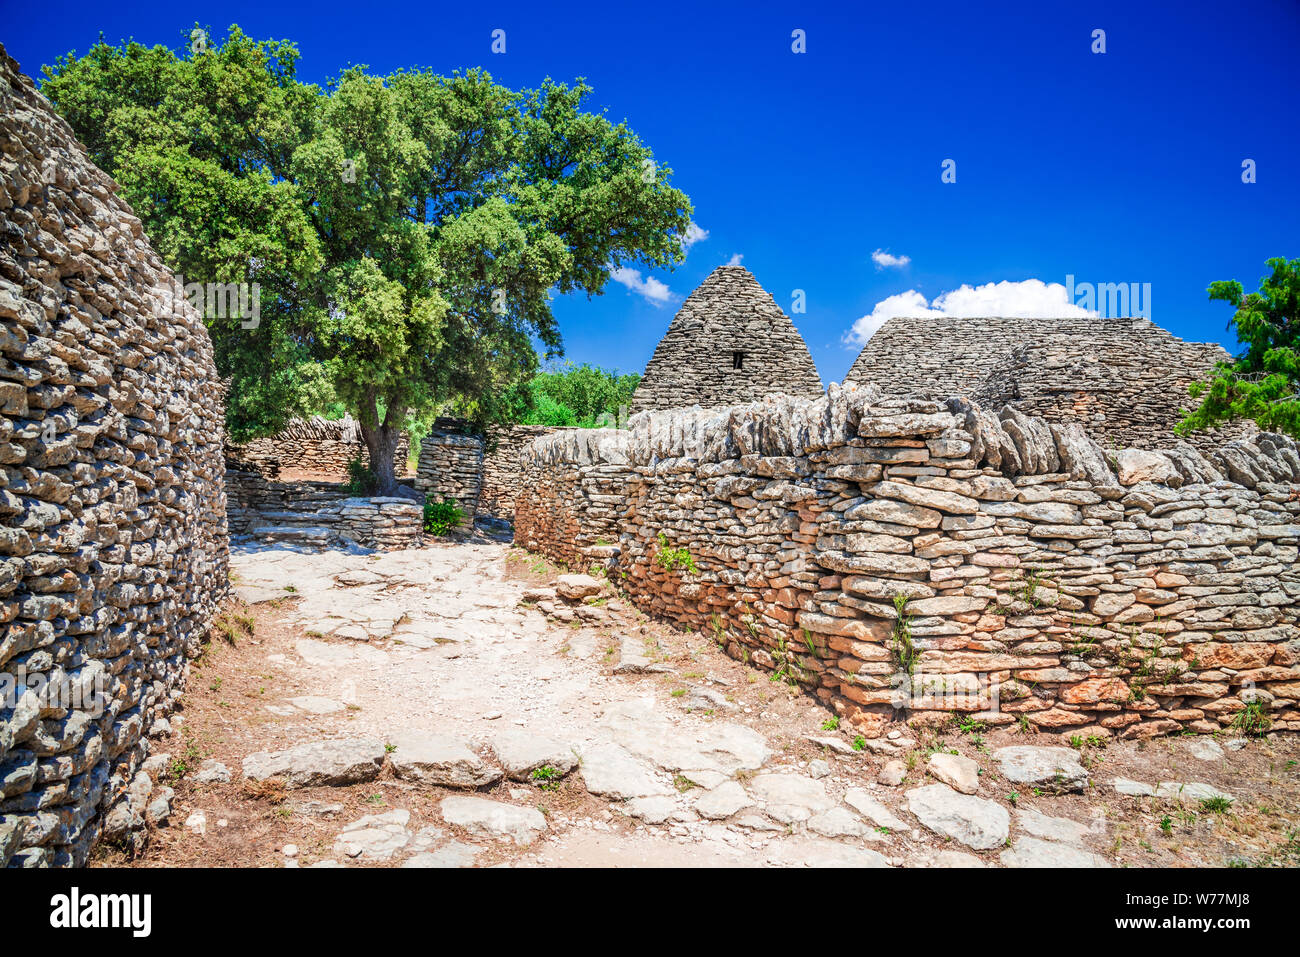 Gordes, Vaucluse - Borie, una estructura de piedra seca en la Región Provence-Alpes-Côte d'Azur del sudeste de Francia Foto de stock